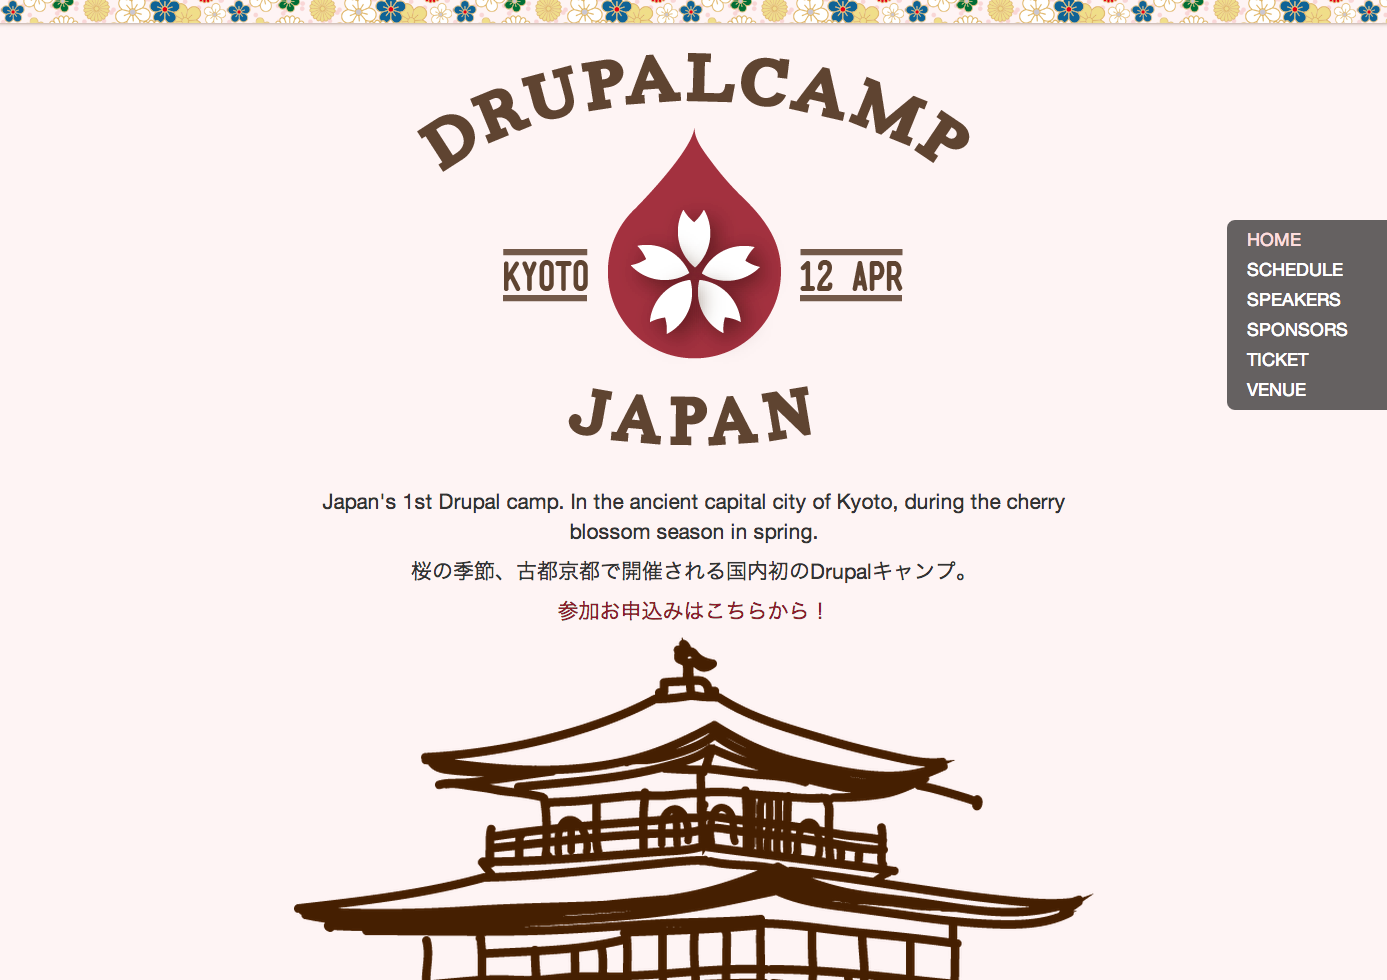 Drupal Camp Japan Kyoto 2014 page